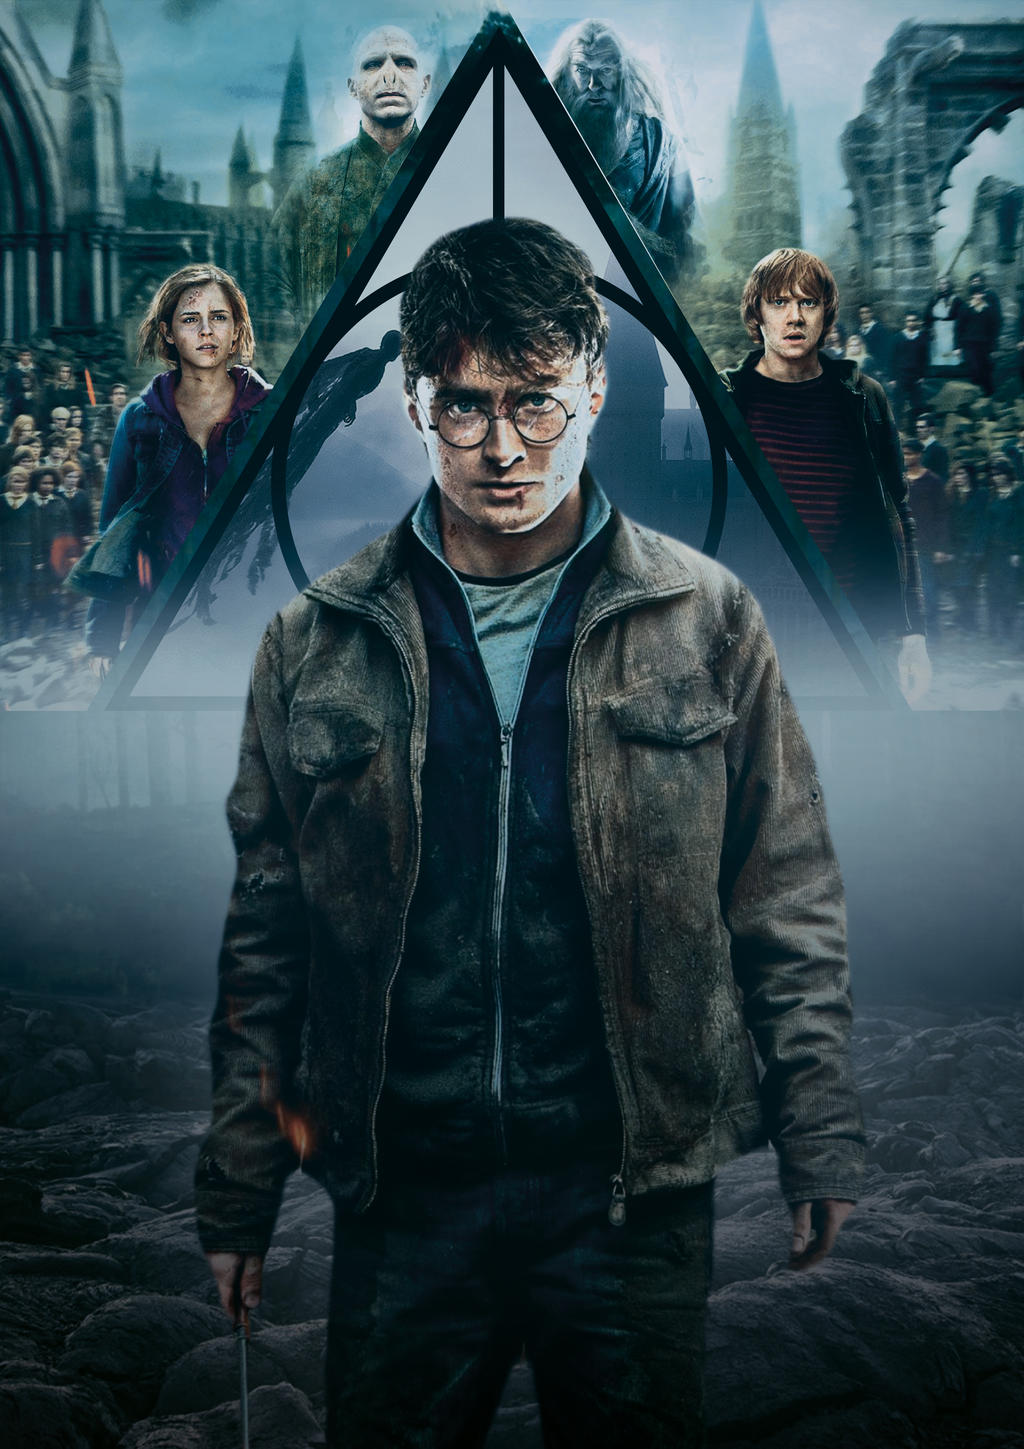 Harry Potter Poster by GDemirTR on DeviantArt